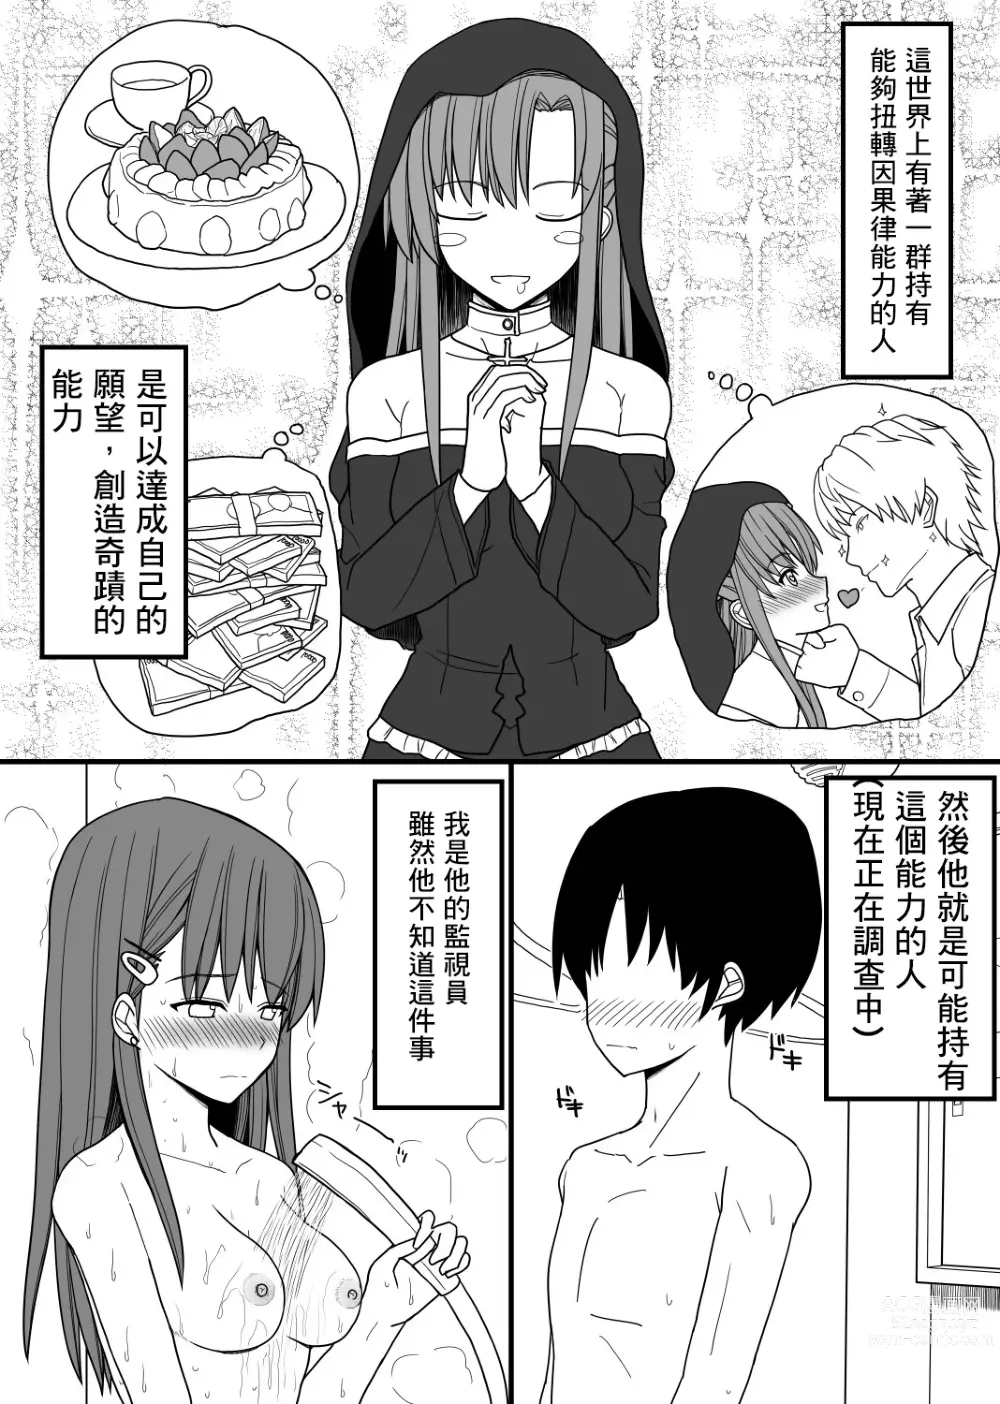 Page 1 of doujinshi 超能力を使える少年と監視員の少女